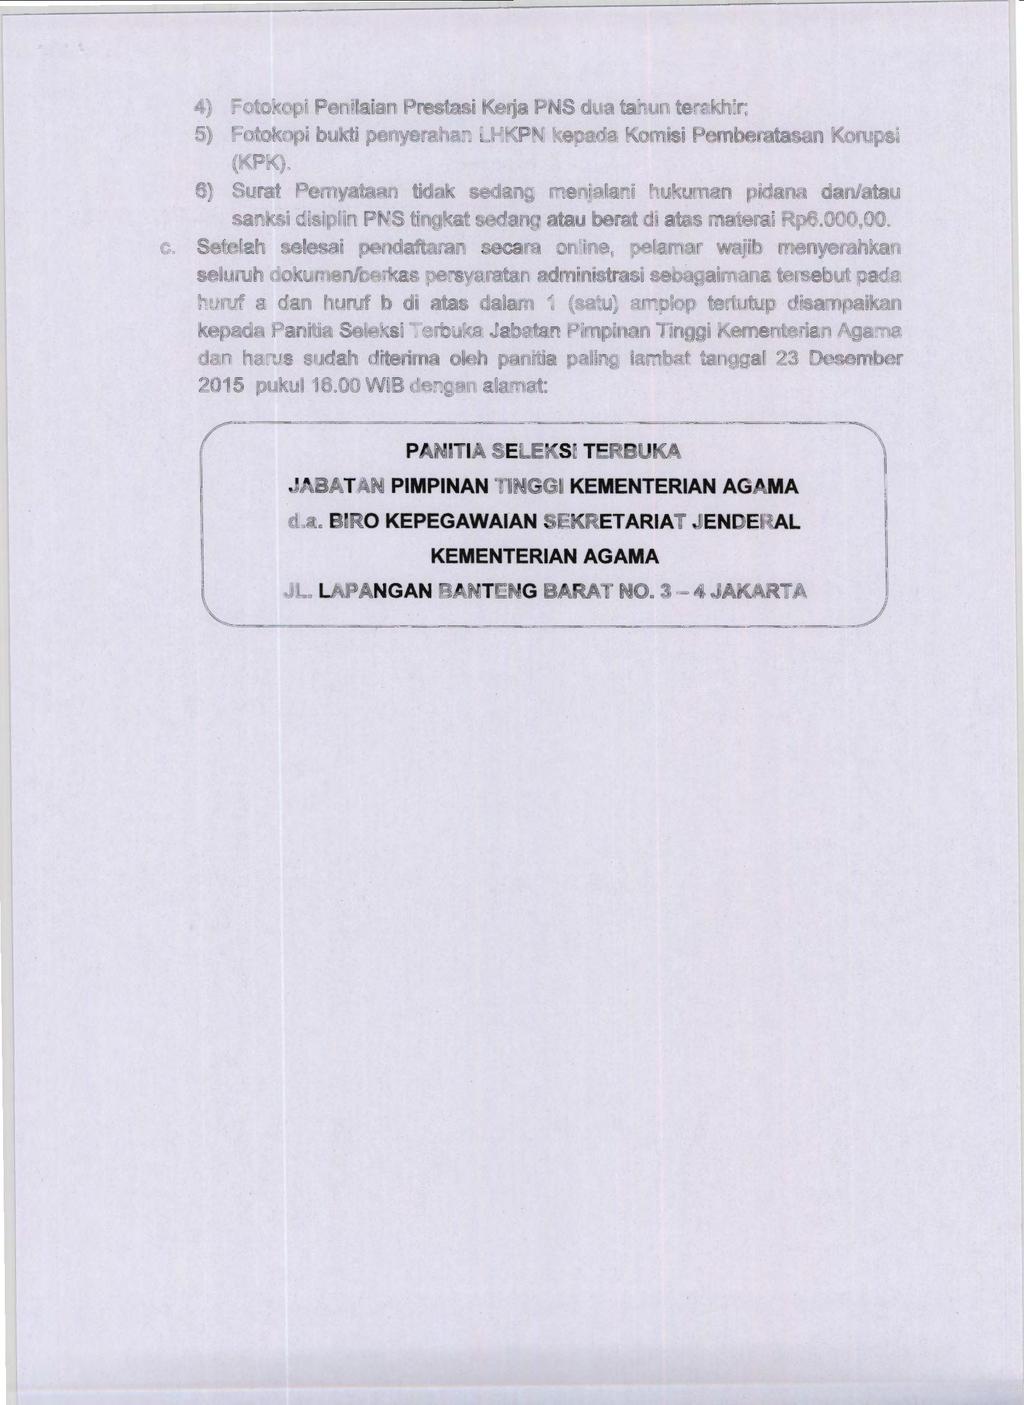 4) Fotokopi Penilaian Prestasi Ke~a PNS dua tahun terakhir; 5) Fotokopi bukti penyerahan LHKPN kepada Komisi Pemberatasan Korupsi (KPK).